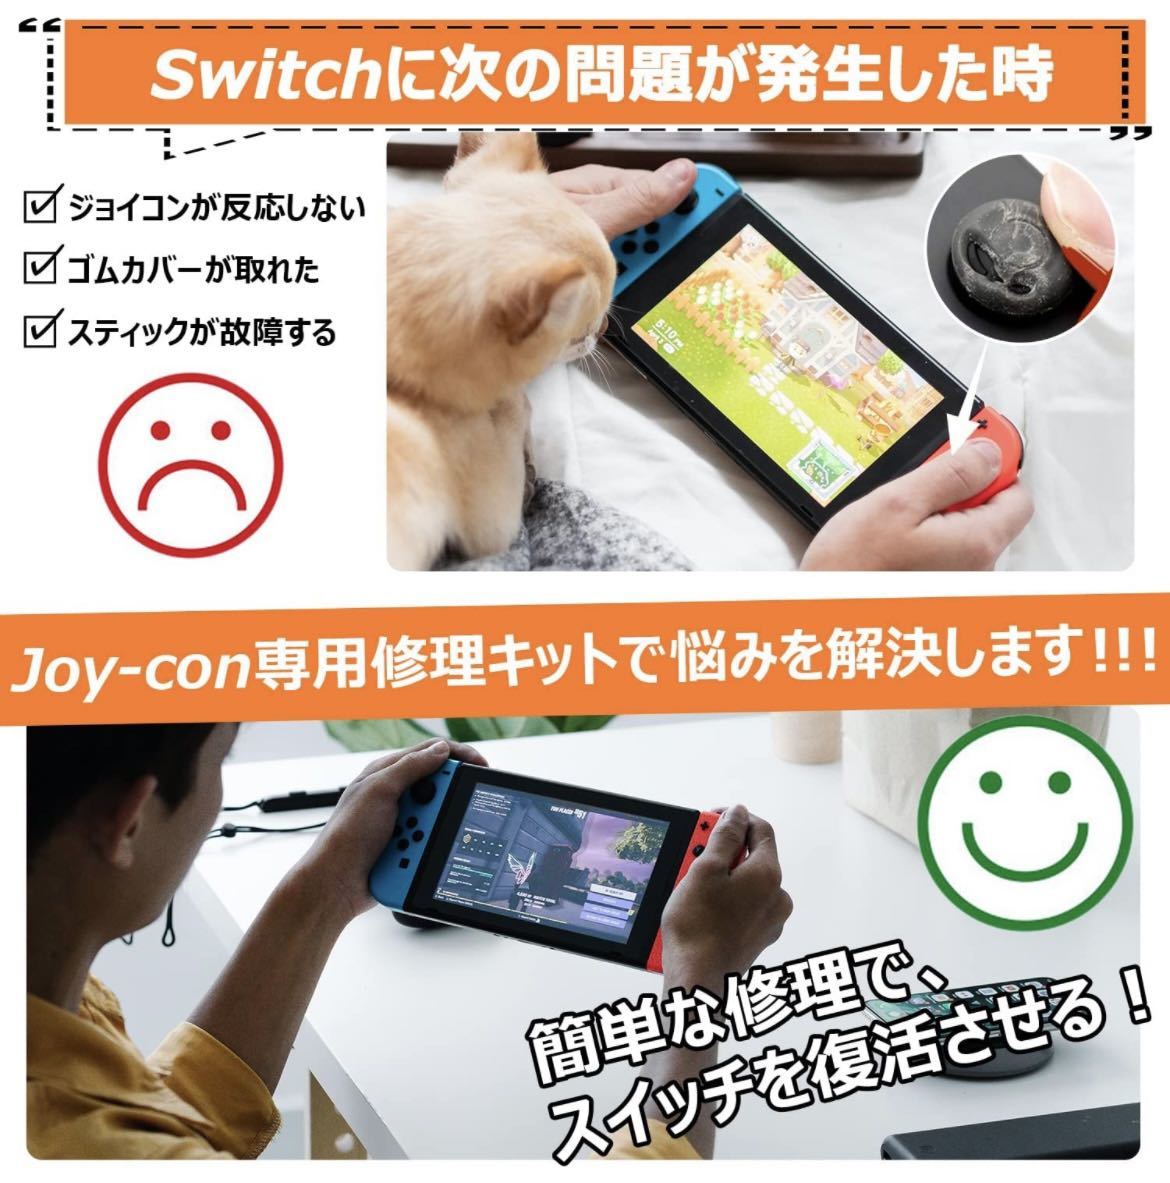 Joy-conスティック Switch ジョイコン 修理パーツ 任天堂スイッチ 交換用パーツ スイッチ 修理セット Nintendo Switch NS Joy-con対応 